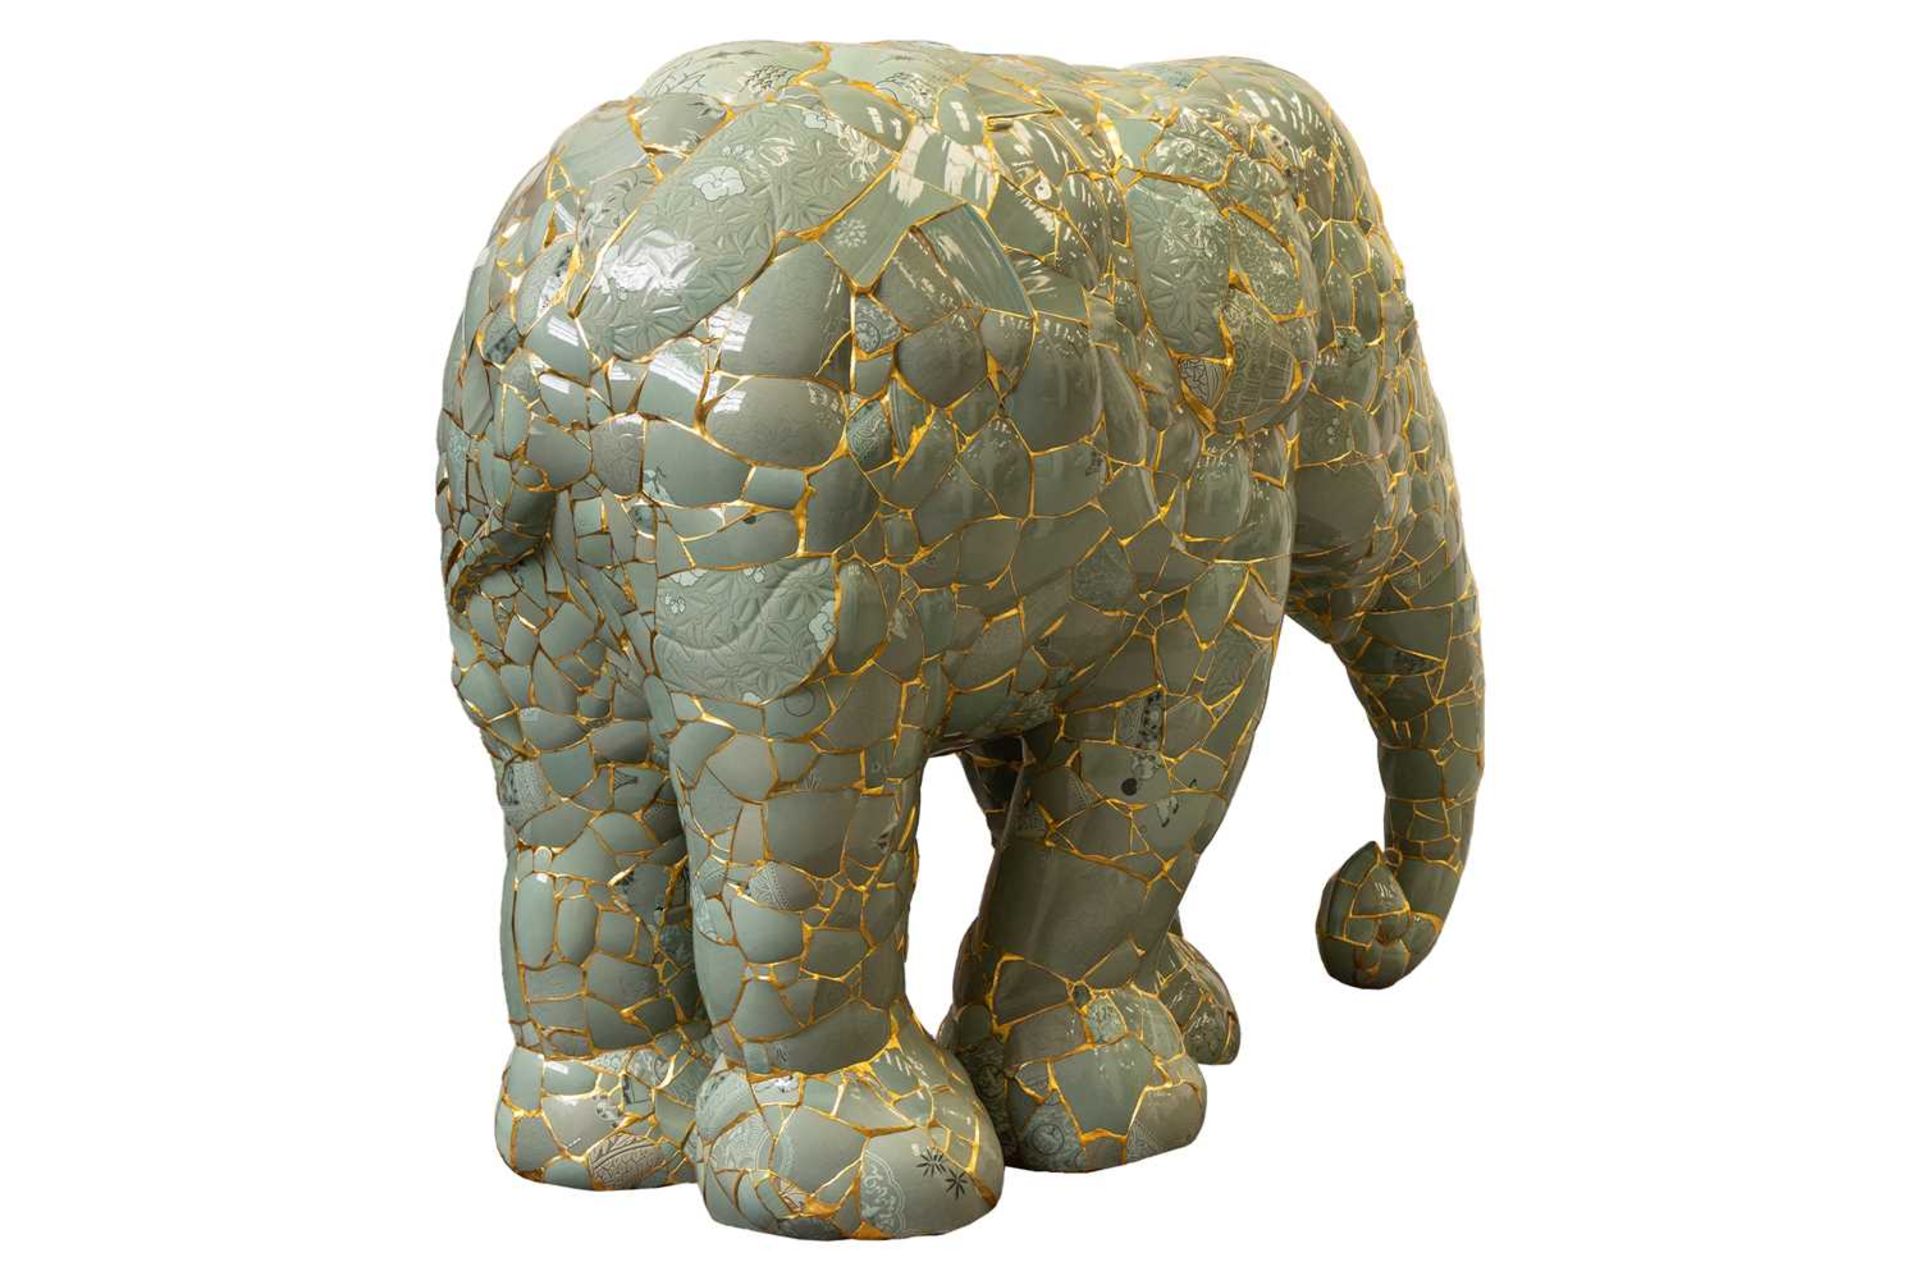 Yeesookyung (b. 1963) South Korean, 'Translated Vase Baby Elephant' (2012), celadon ceramic pieces f - Bild 4 aus 16